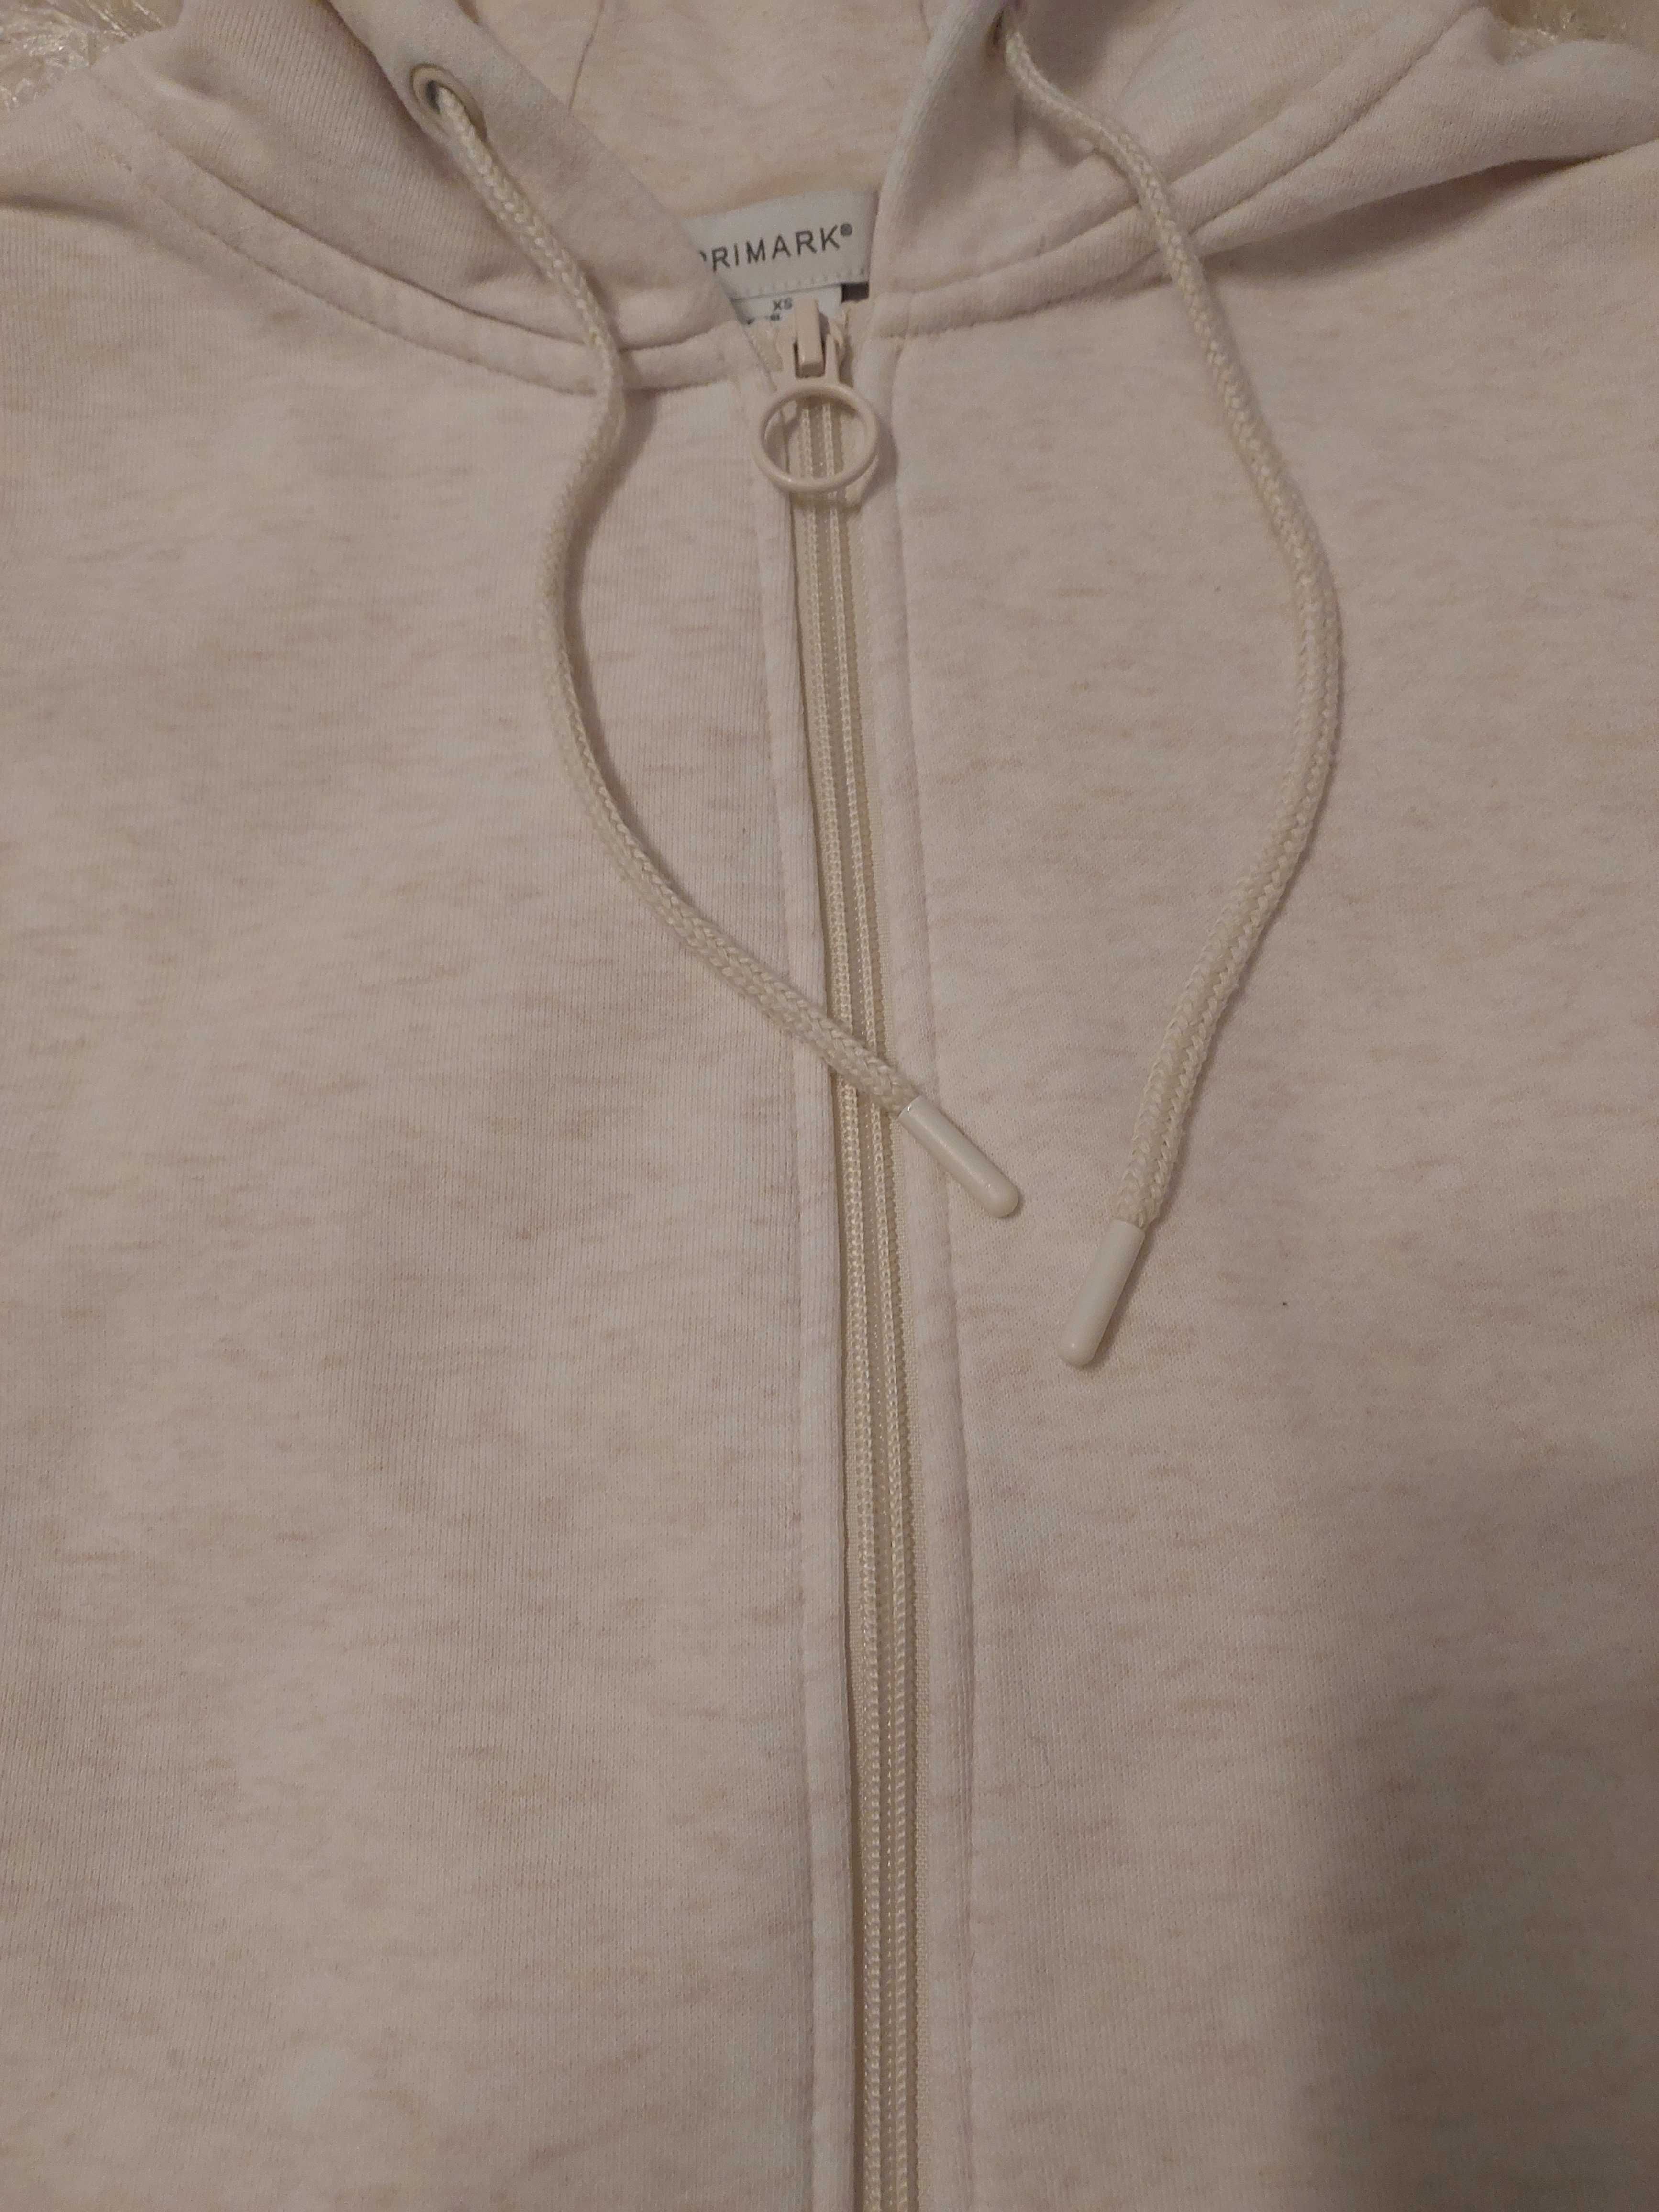 Bluza z kapturem rozpinana PIRIMARK 152/158